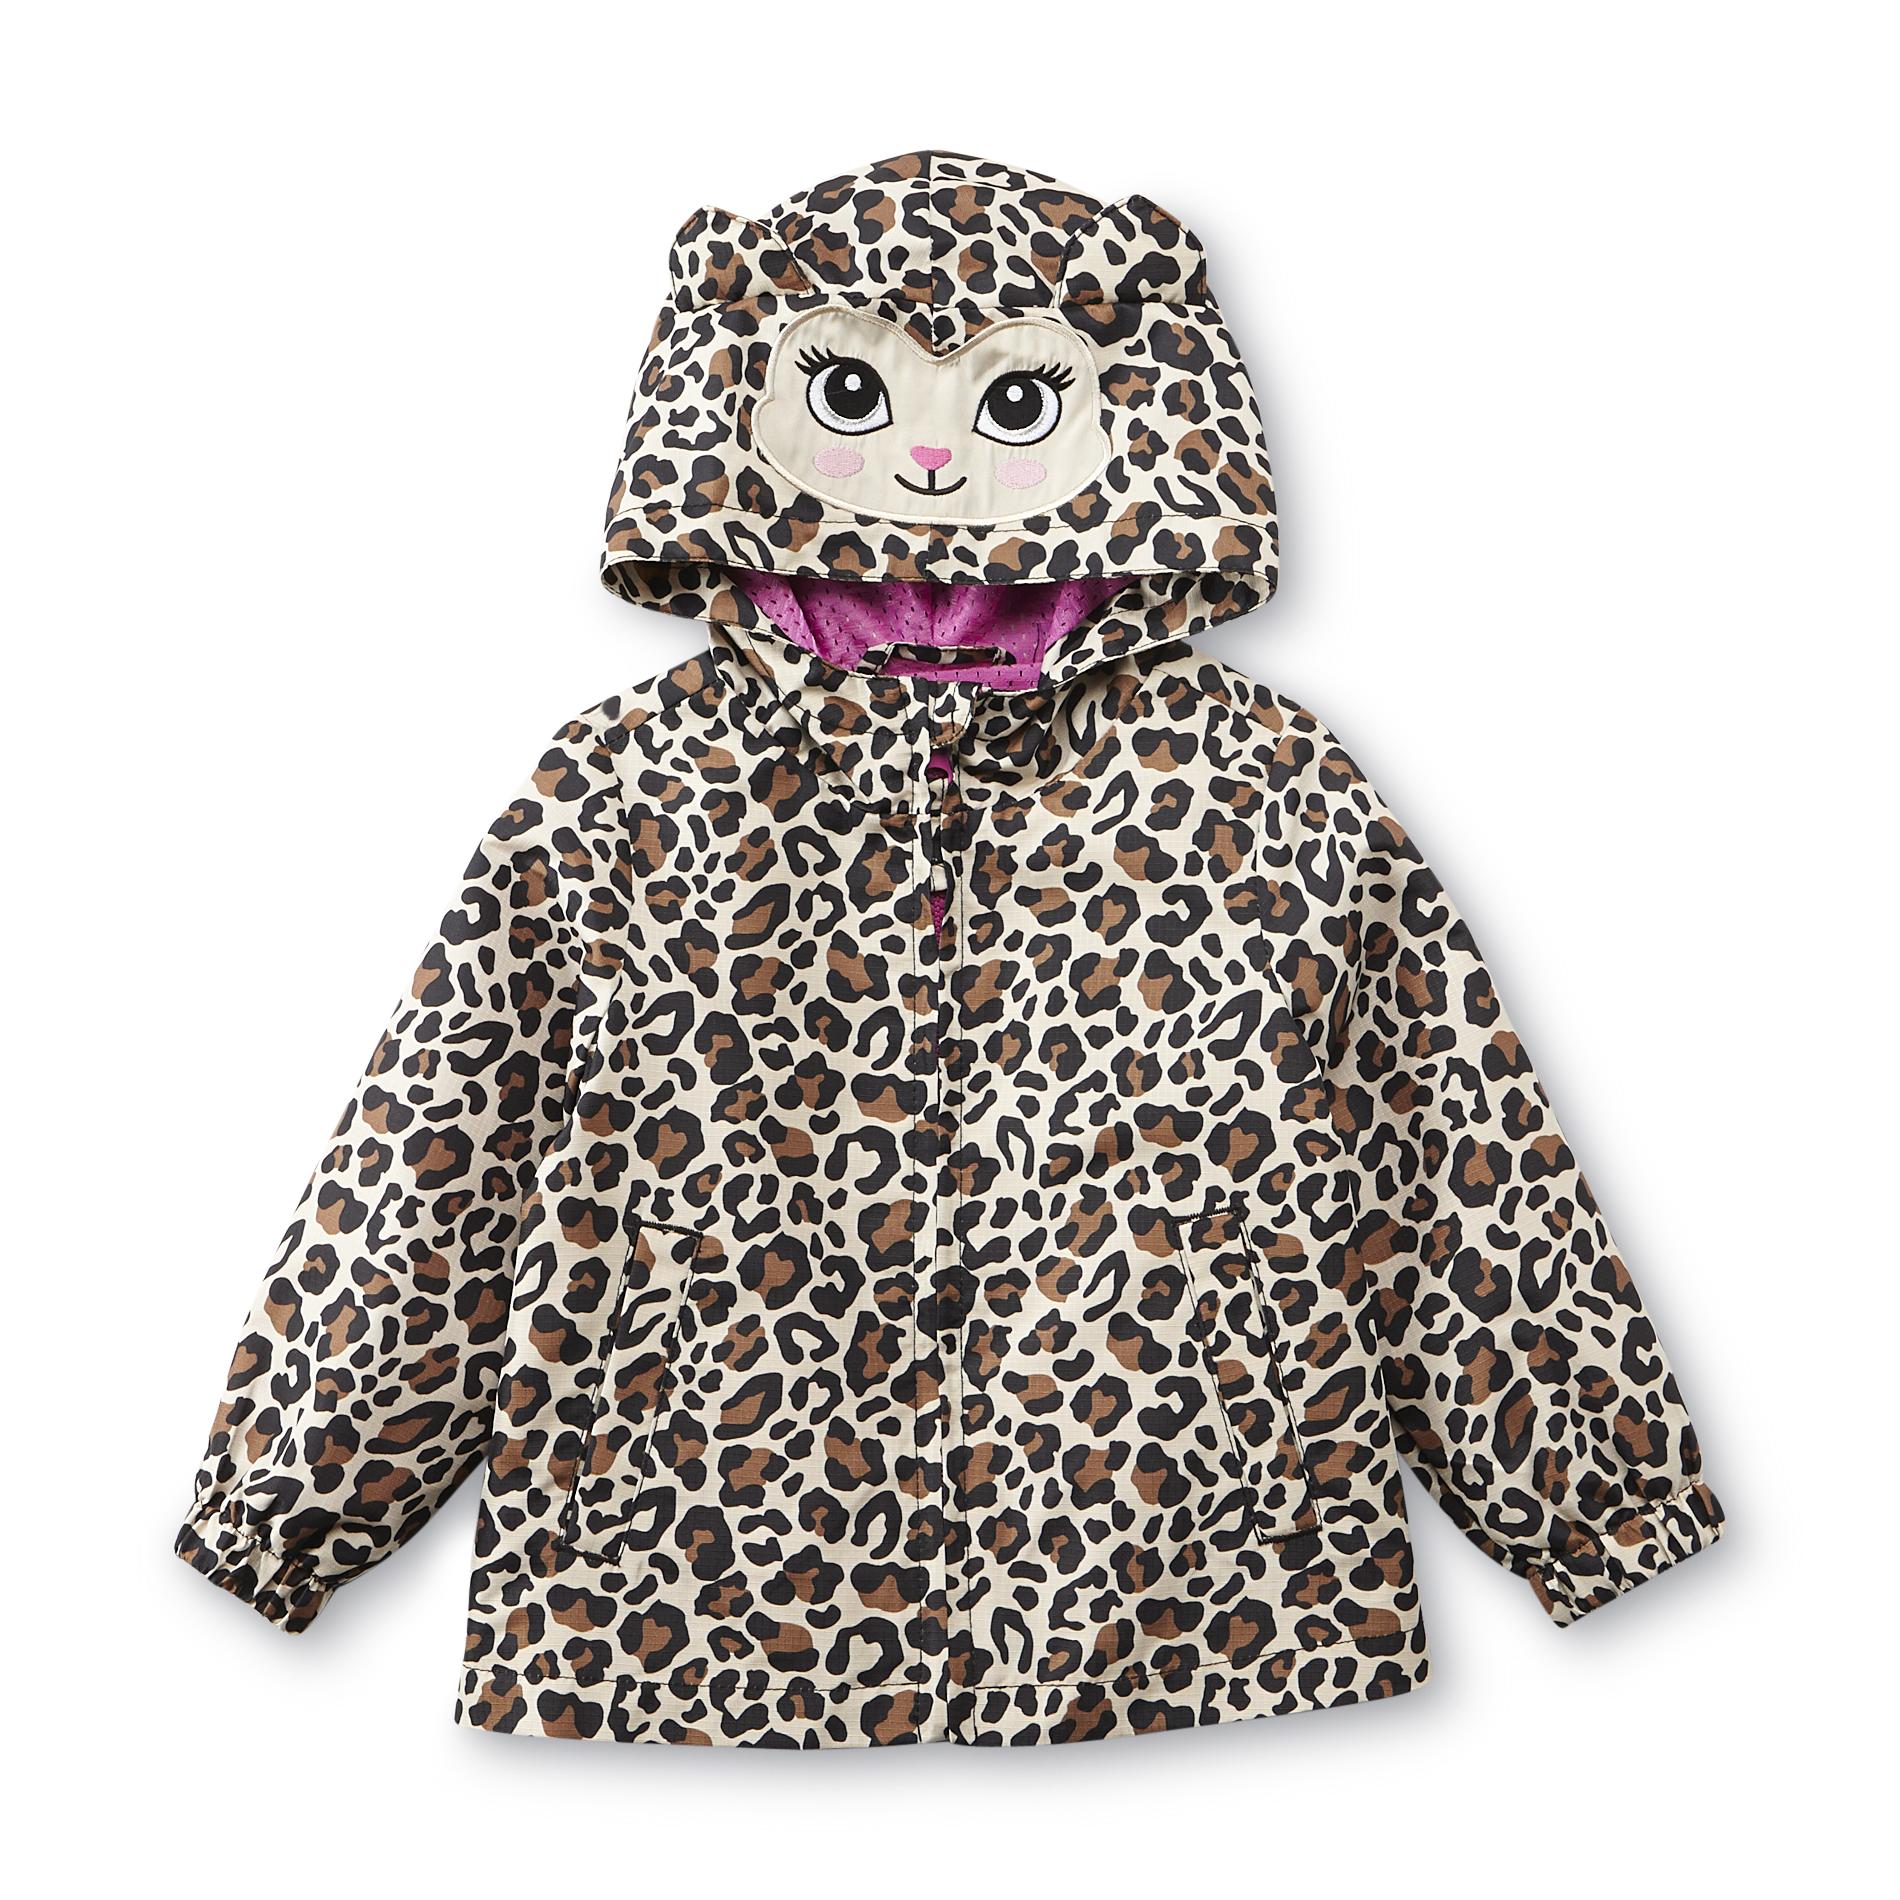 WonderKids Infant & Toddler Girl's Windbreaker Jacket - Cheetah Print